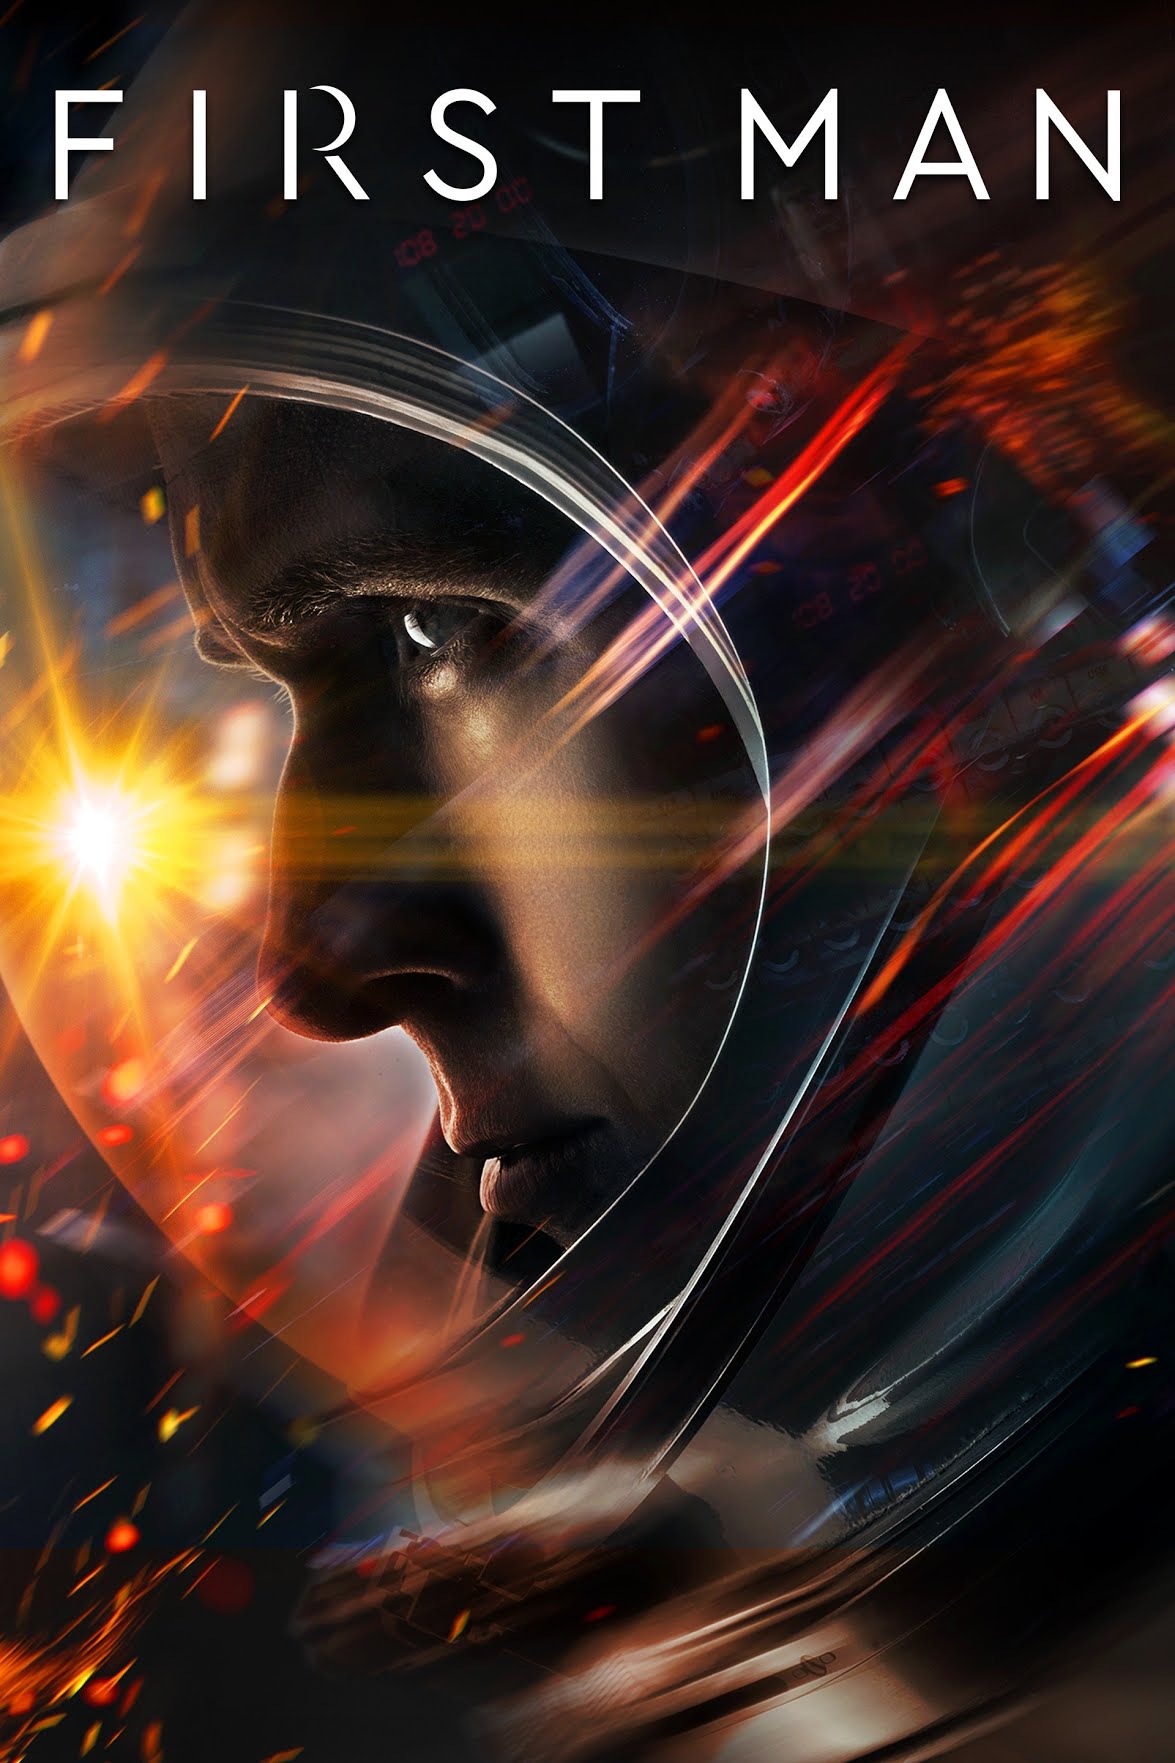 image of man in astronaut suit